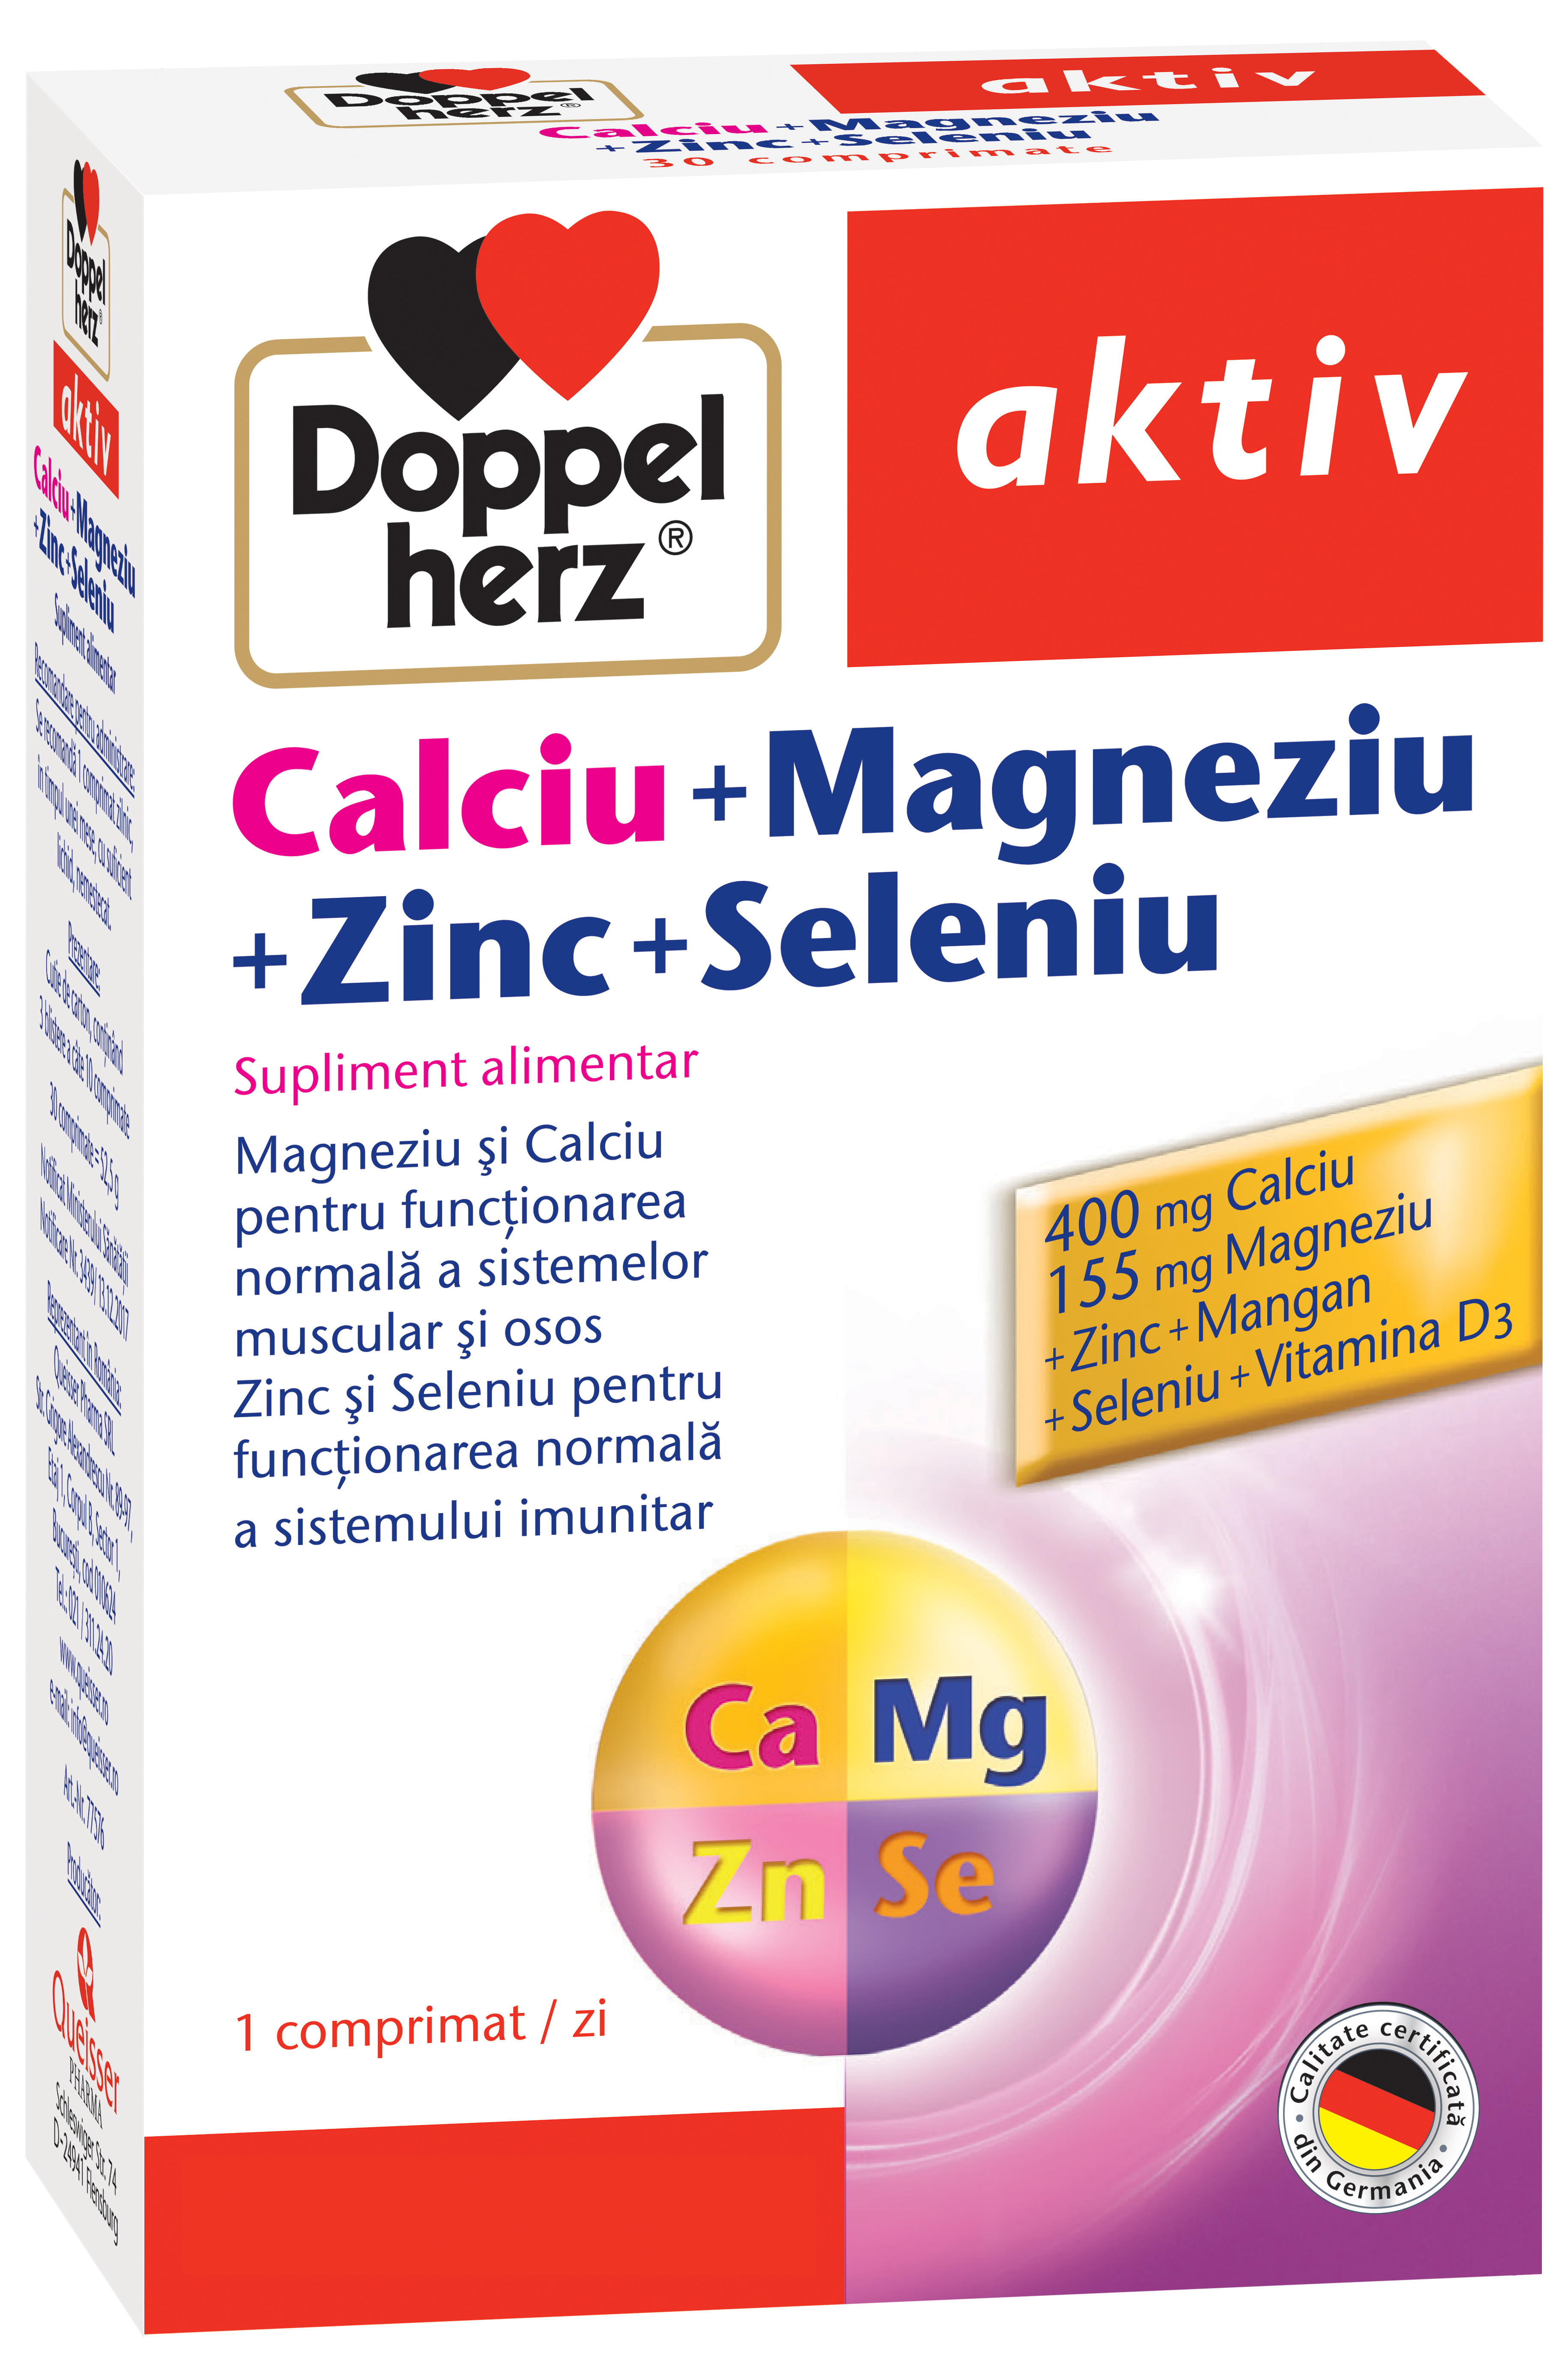 Multivitamine si minerale - Doppelherz aktiv Calciu + Magneziu + Zinc + Seleniu x 30 comprimate, medik-on.ro